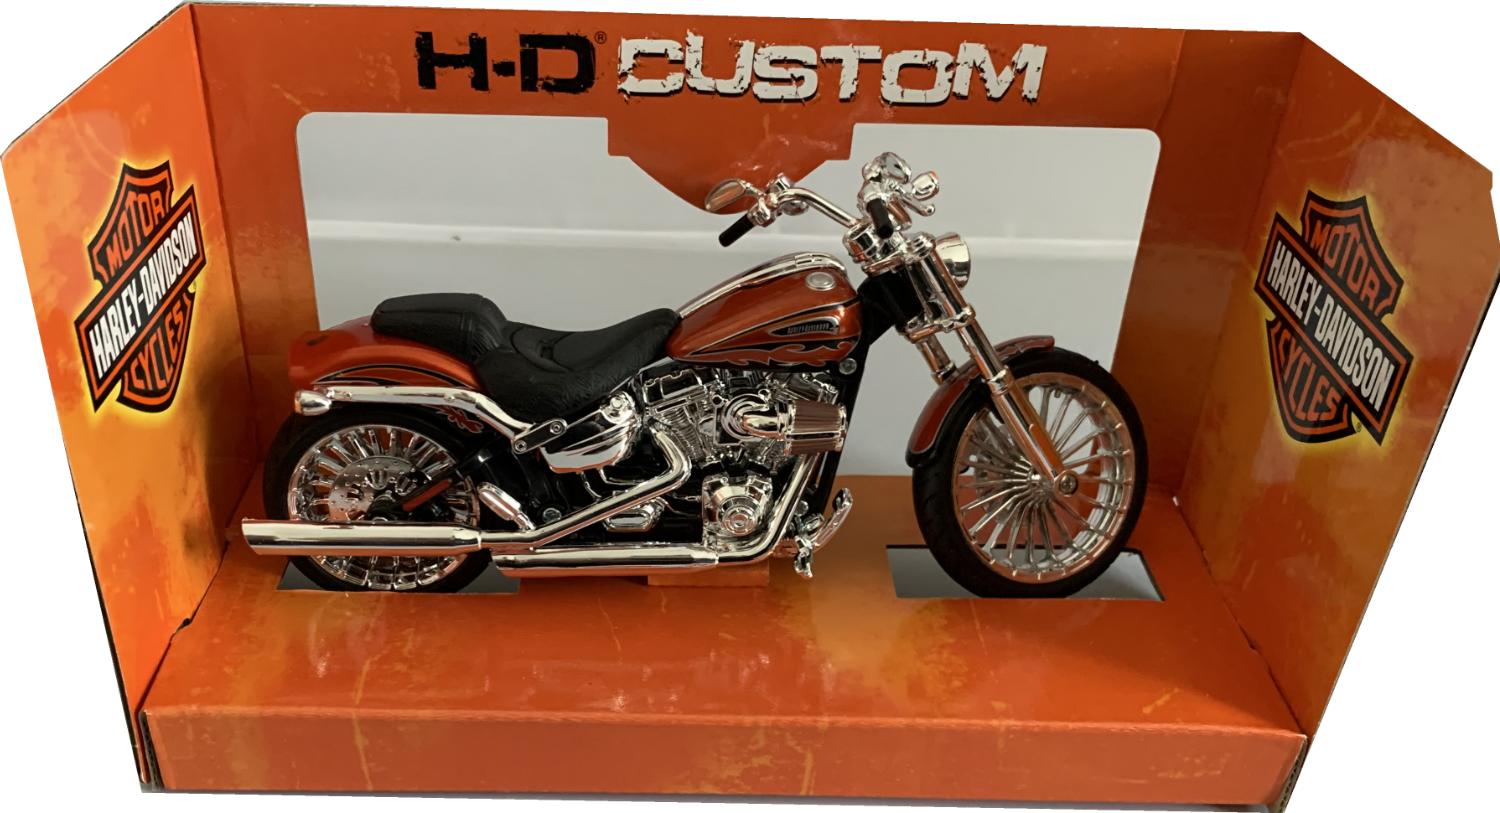 Harley Davidson 2014 CVO Breakout 1:12 scale model from Maisto, MAi32327